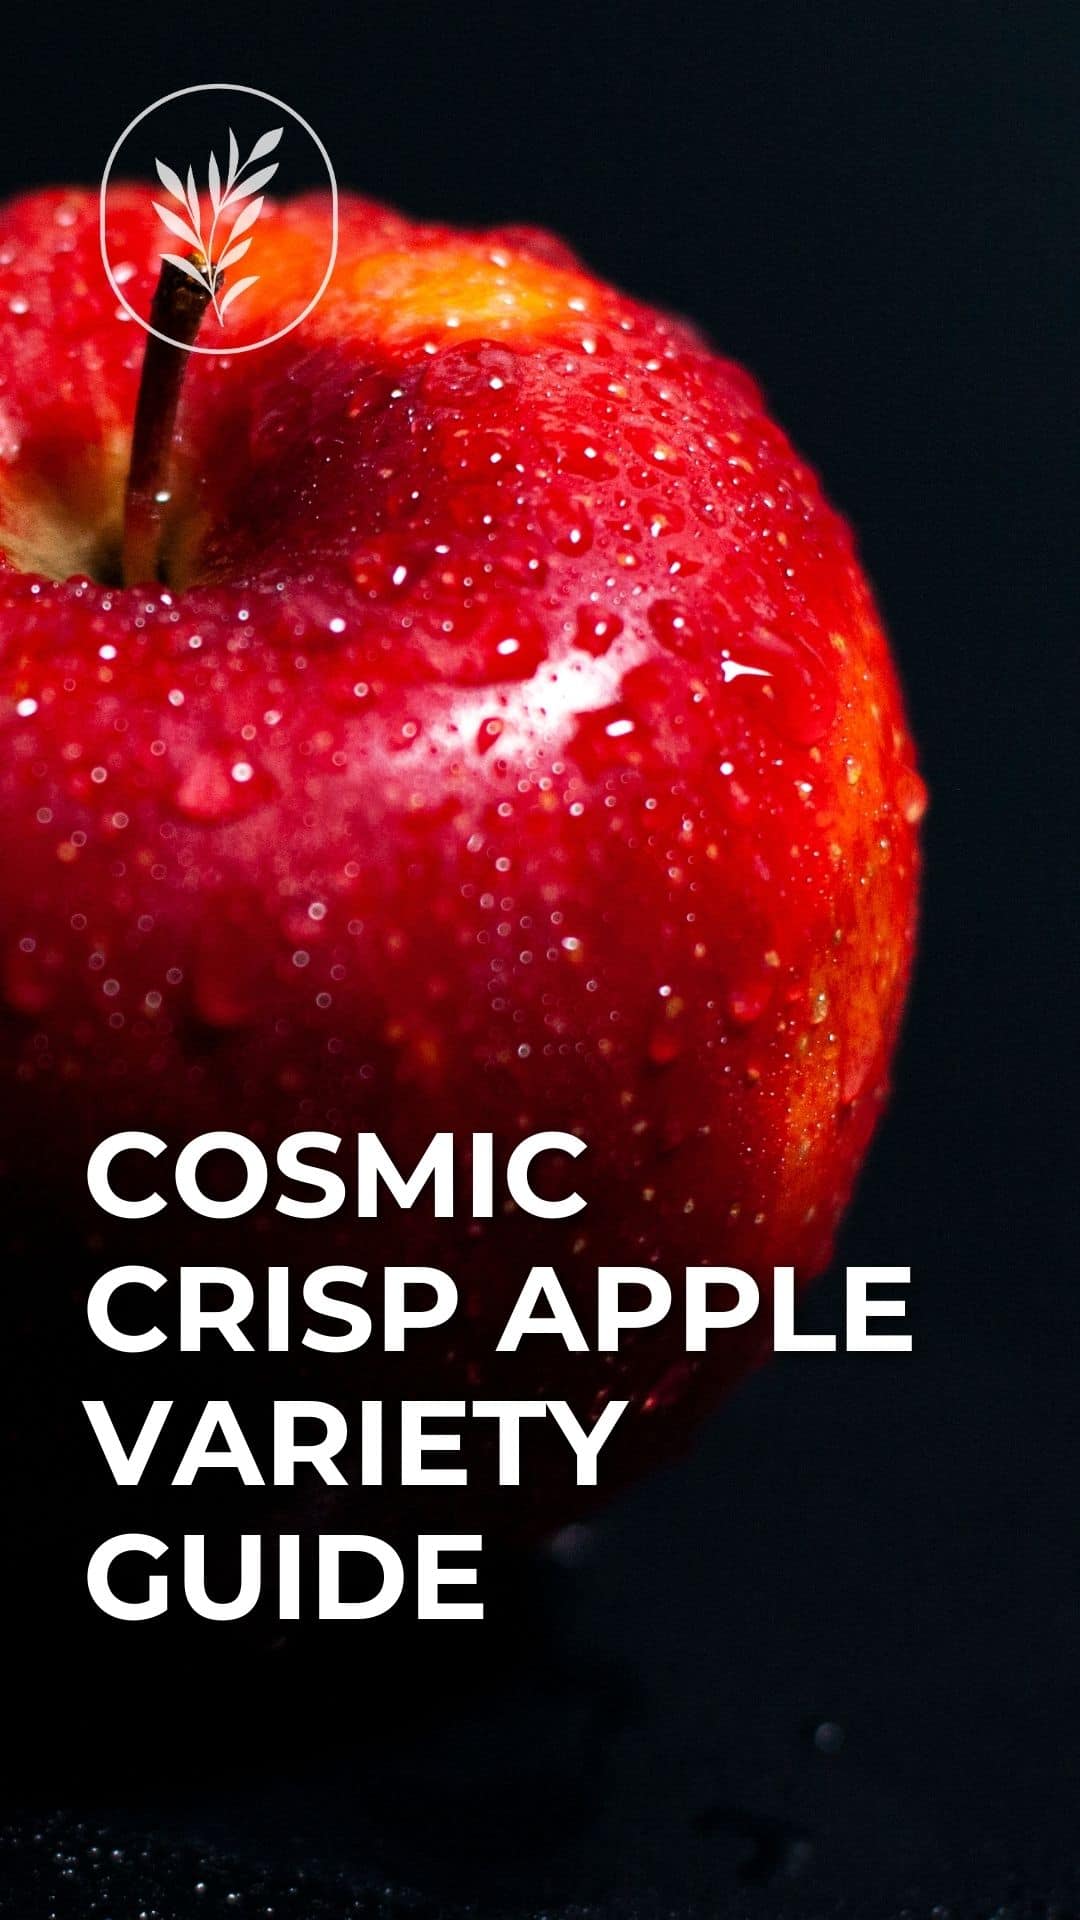 Cosmic crisp apple variety guide - story via @home4theharvest